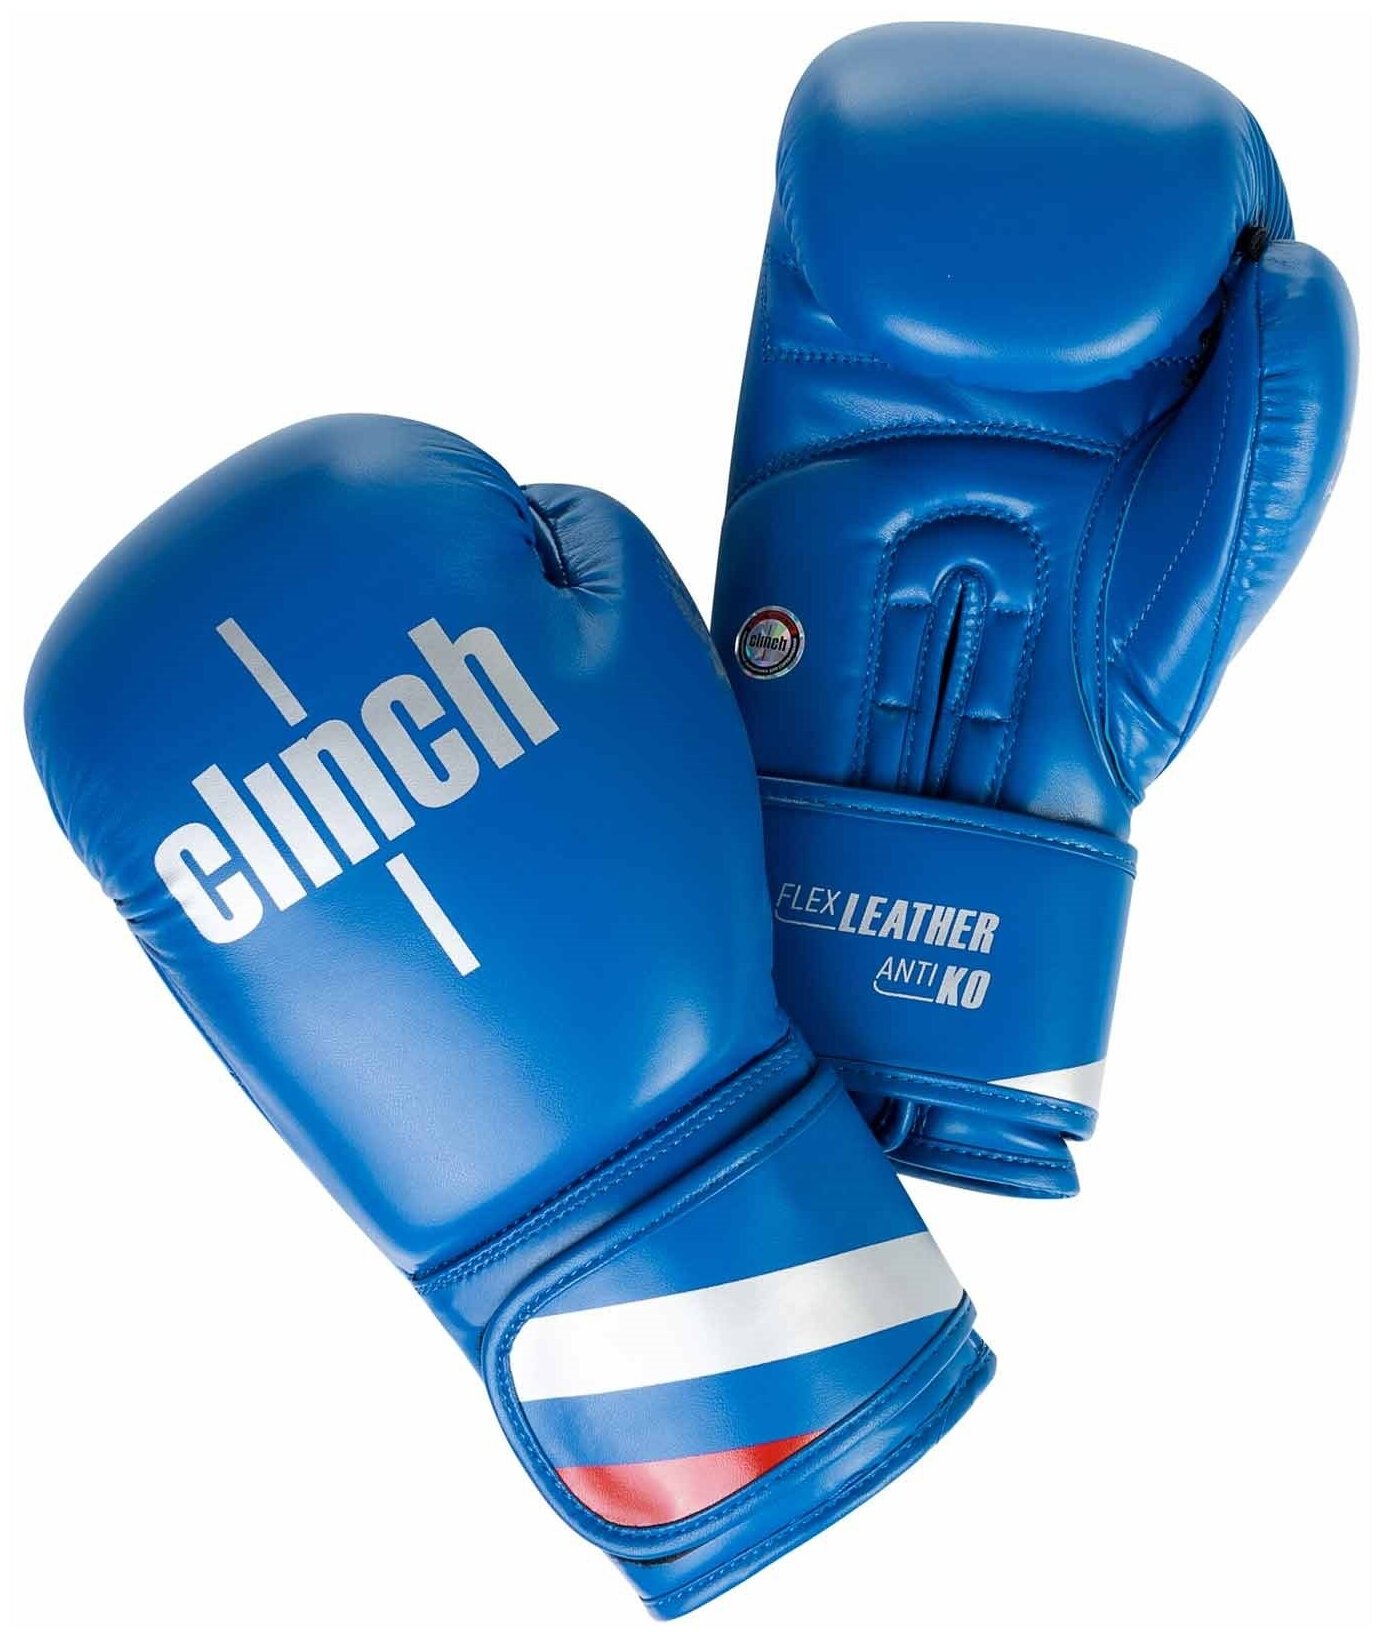 C155 Перчатки боксерские Clinch Olimp Plus синие - Clinch - Cиний - 10 oz